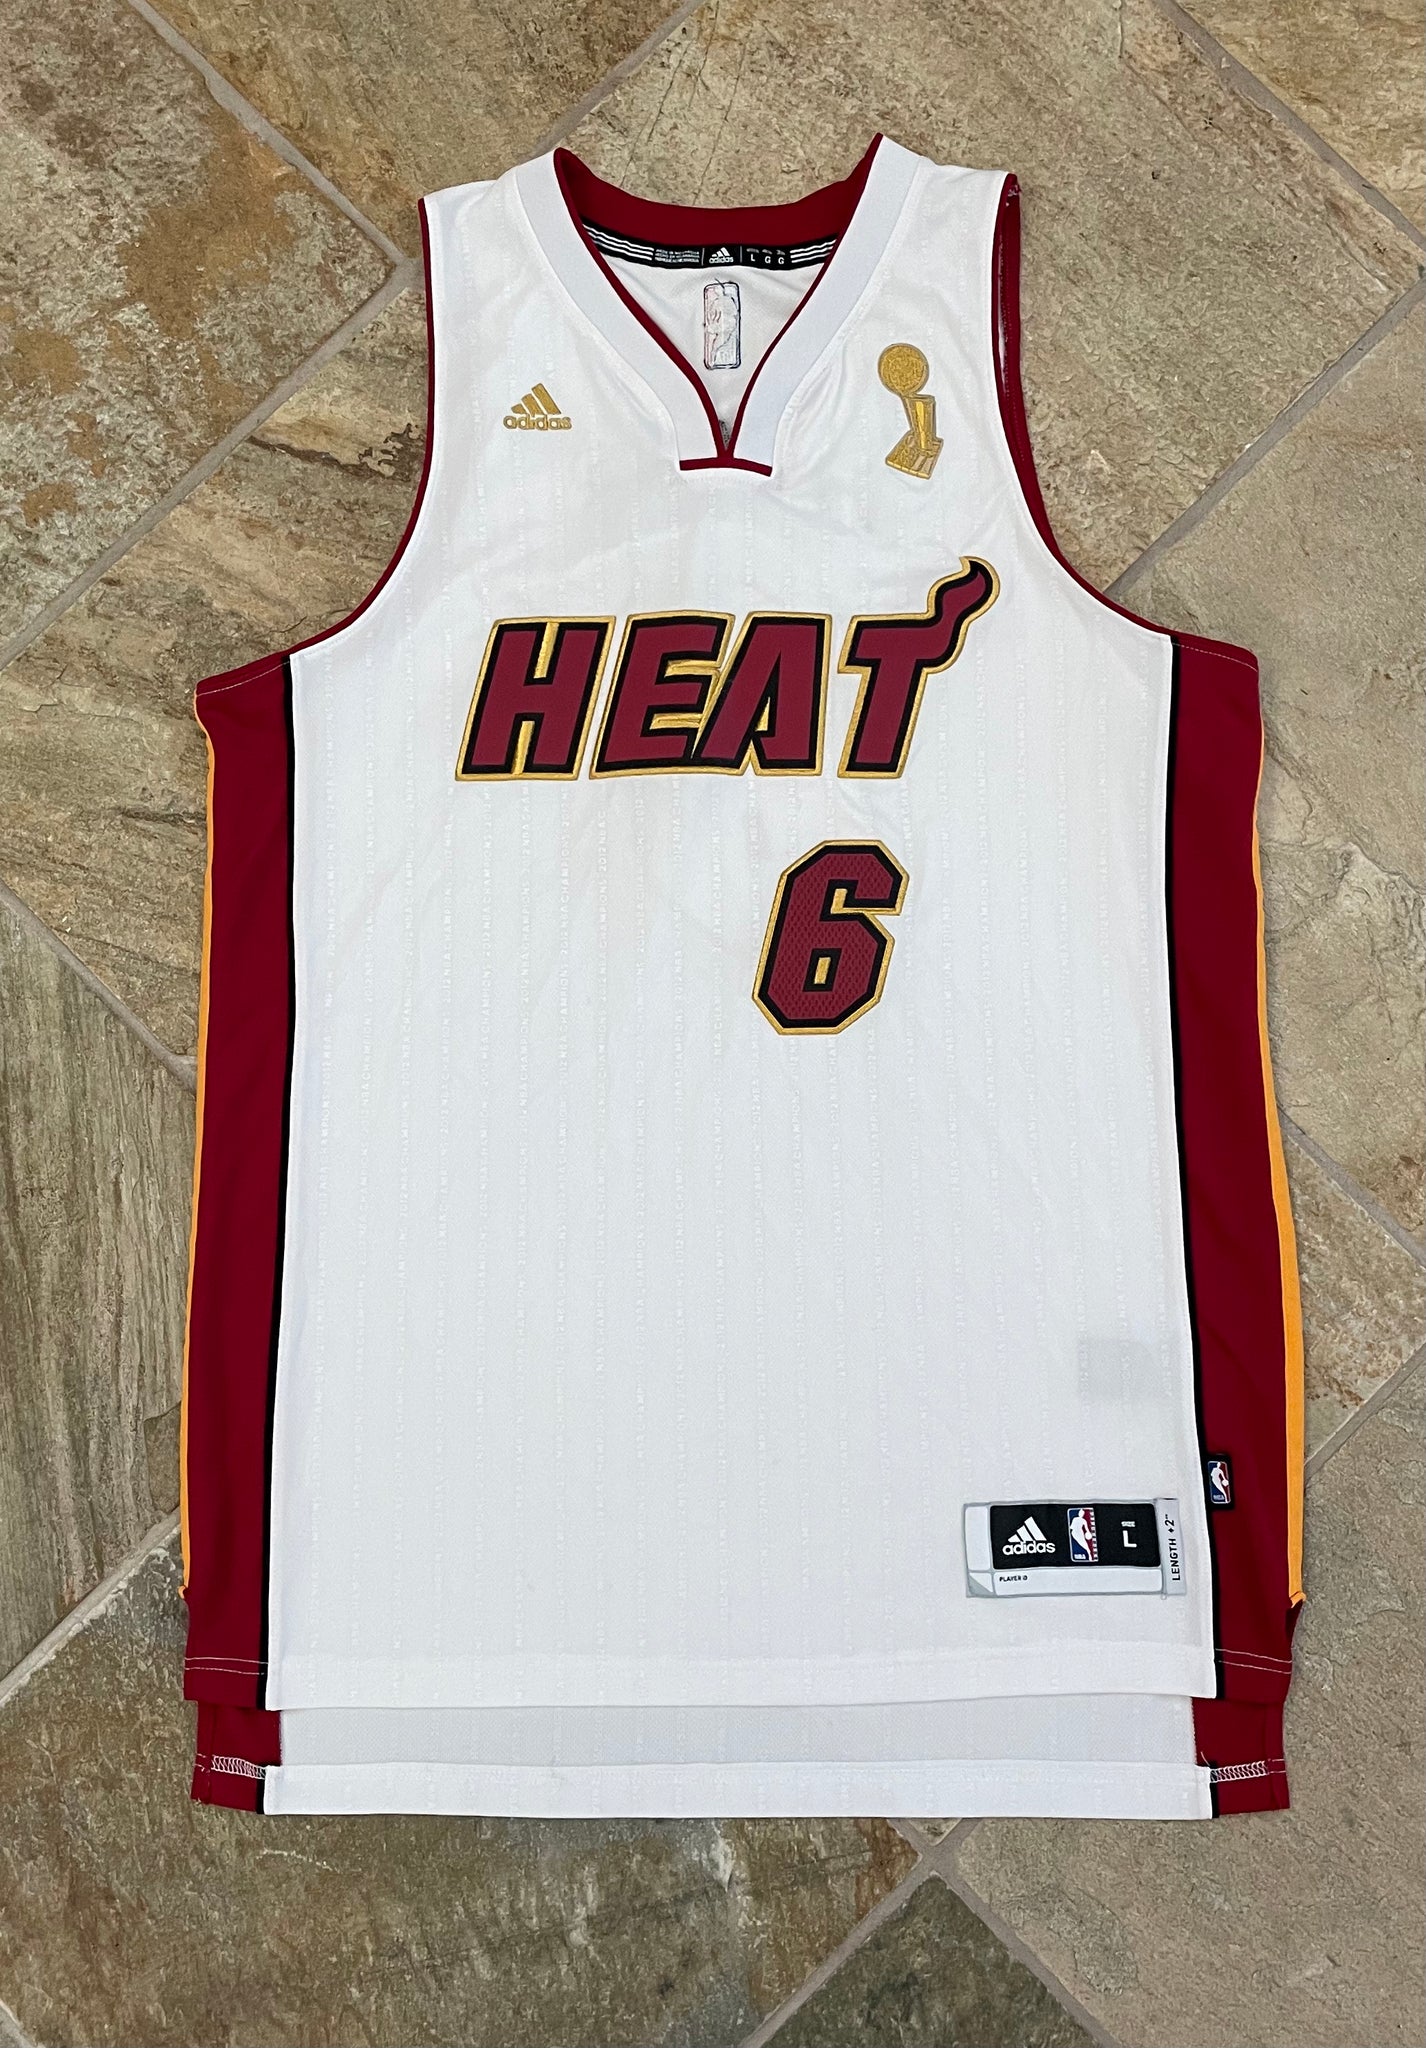 Adidas NBA Heat Lebron James Basketball Jersey 6 Black